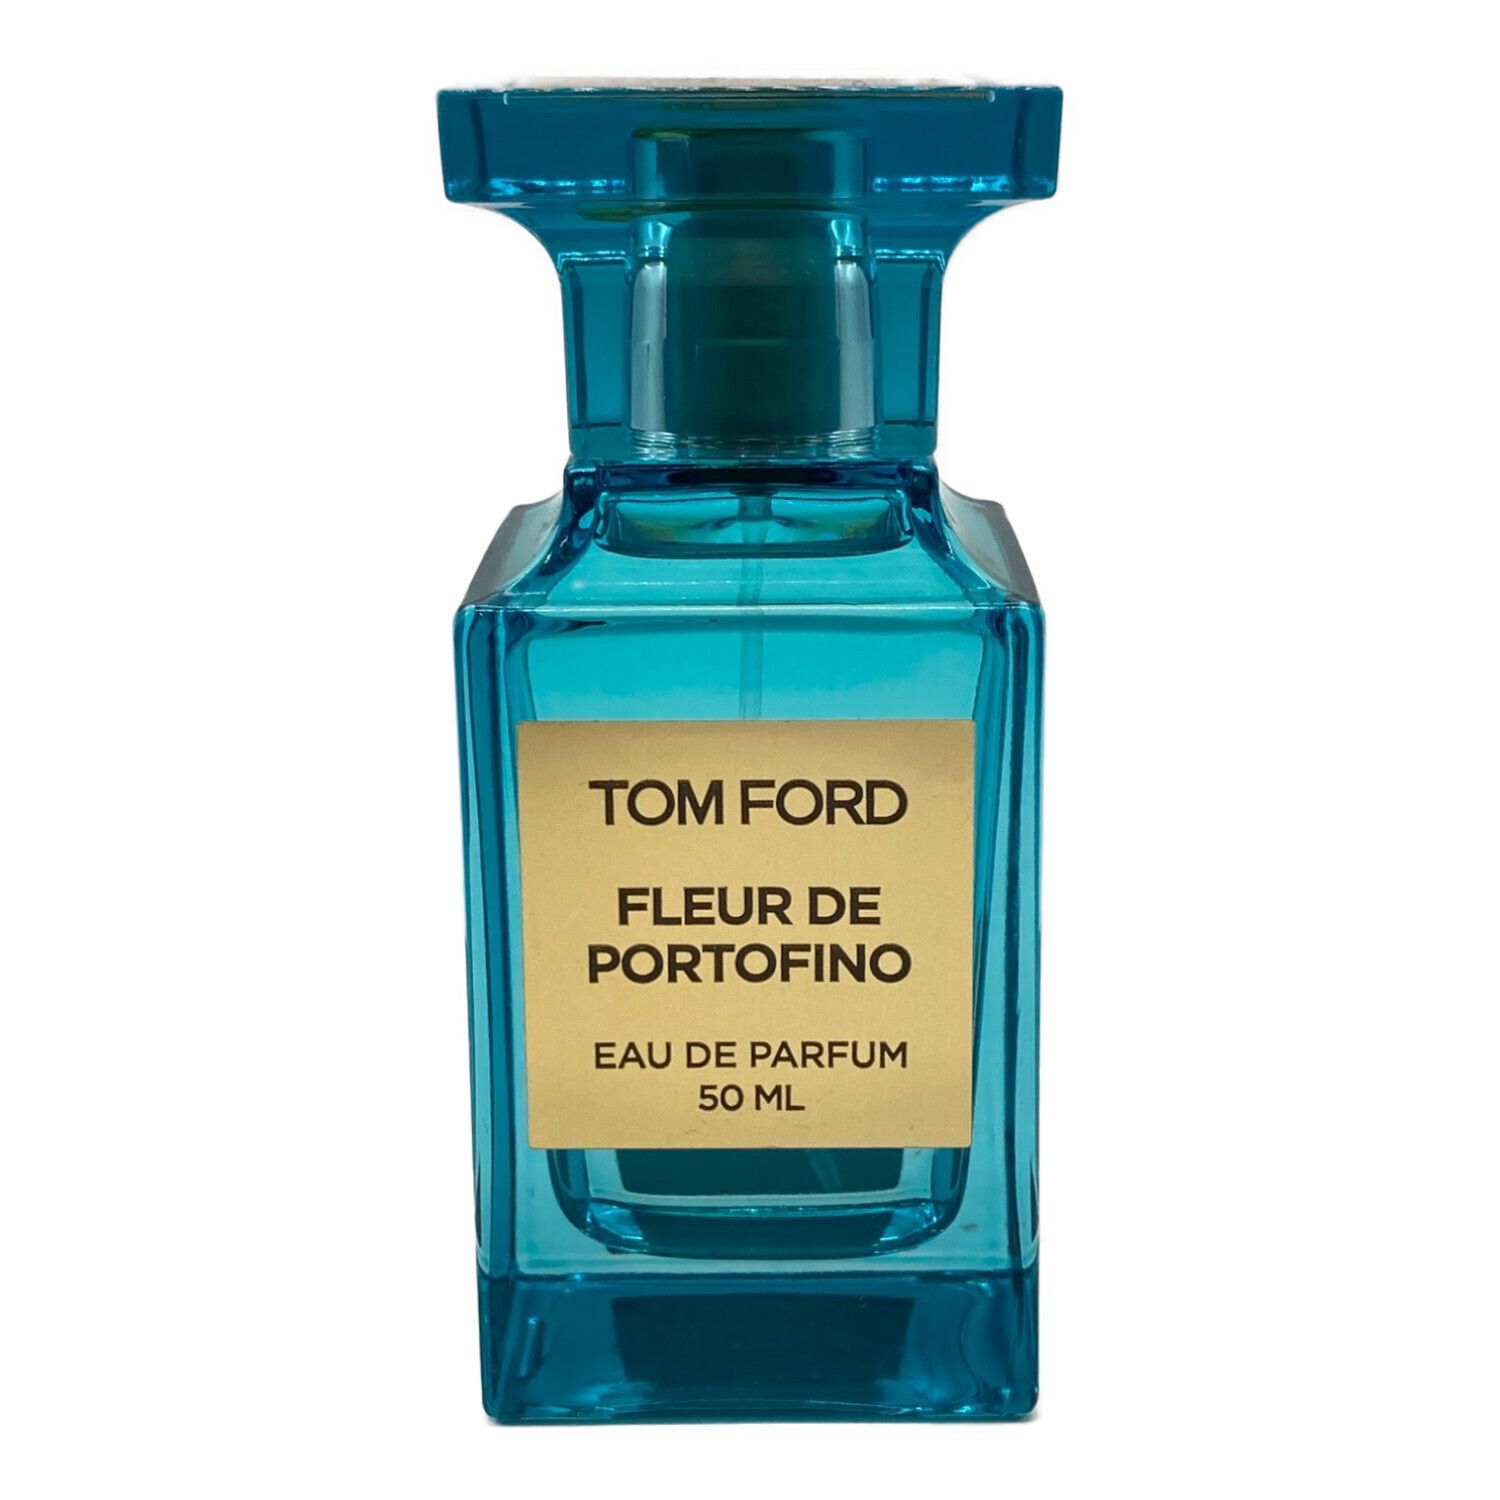 TOM FORDトムフォード ネロリポルトフィーノオードパルファム50mL - 香水